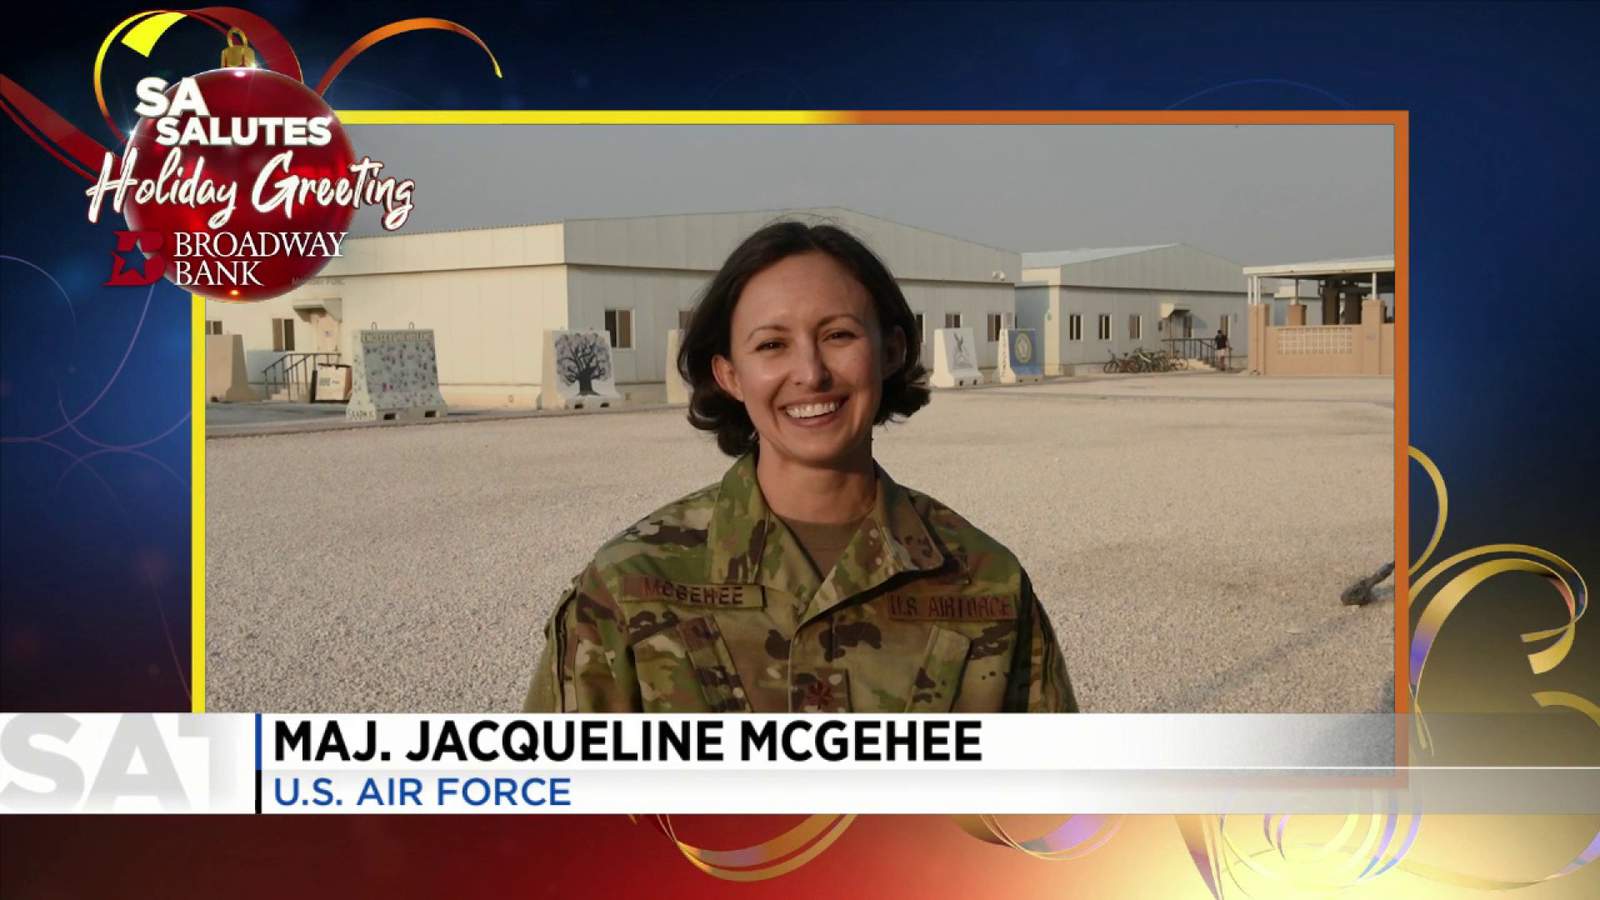 SA Salutes Holiday Greeting: U.S. Air Force Major Jacqueline McGehee